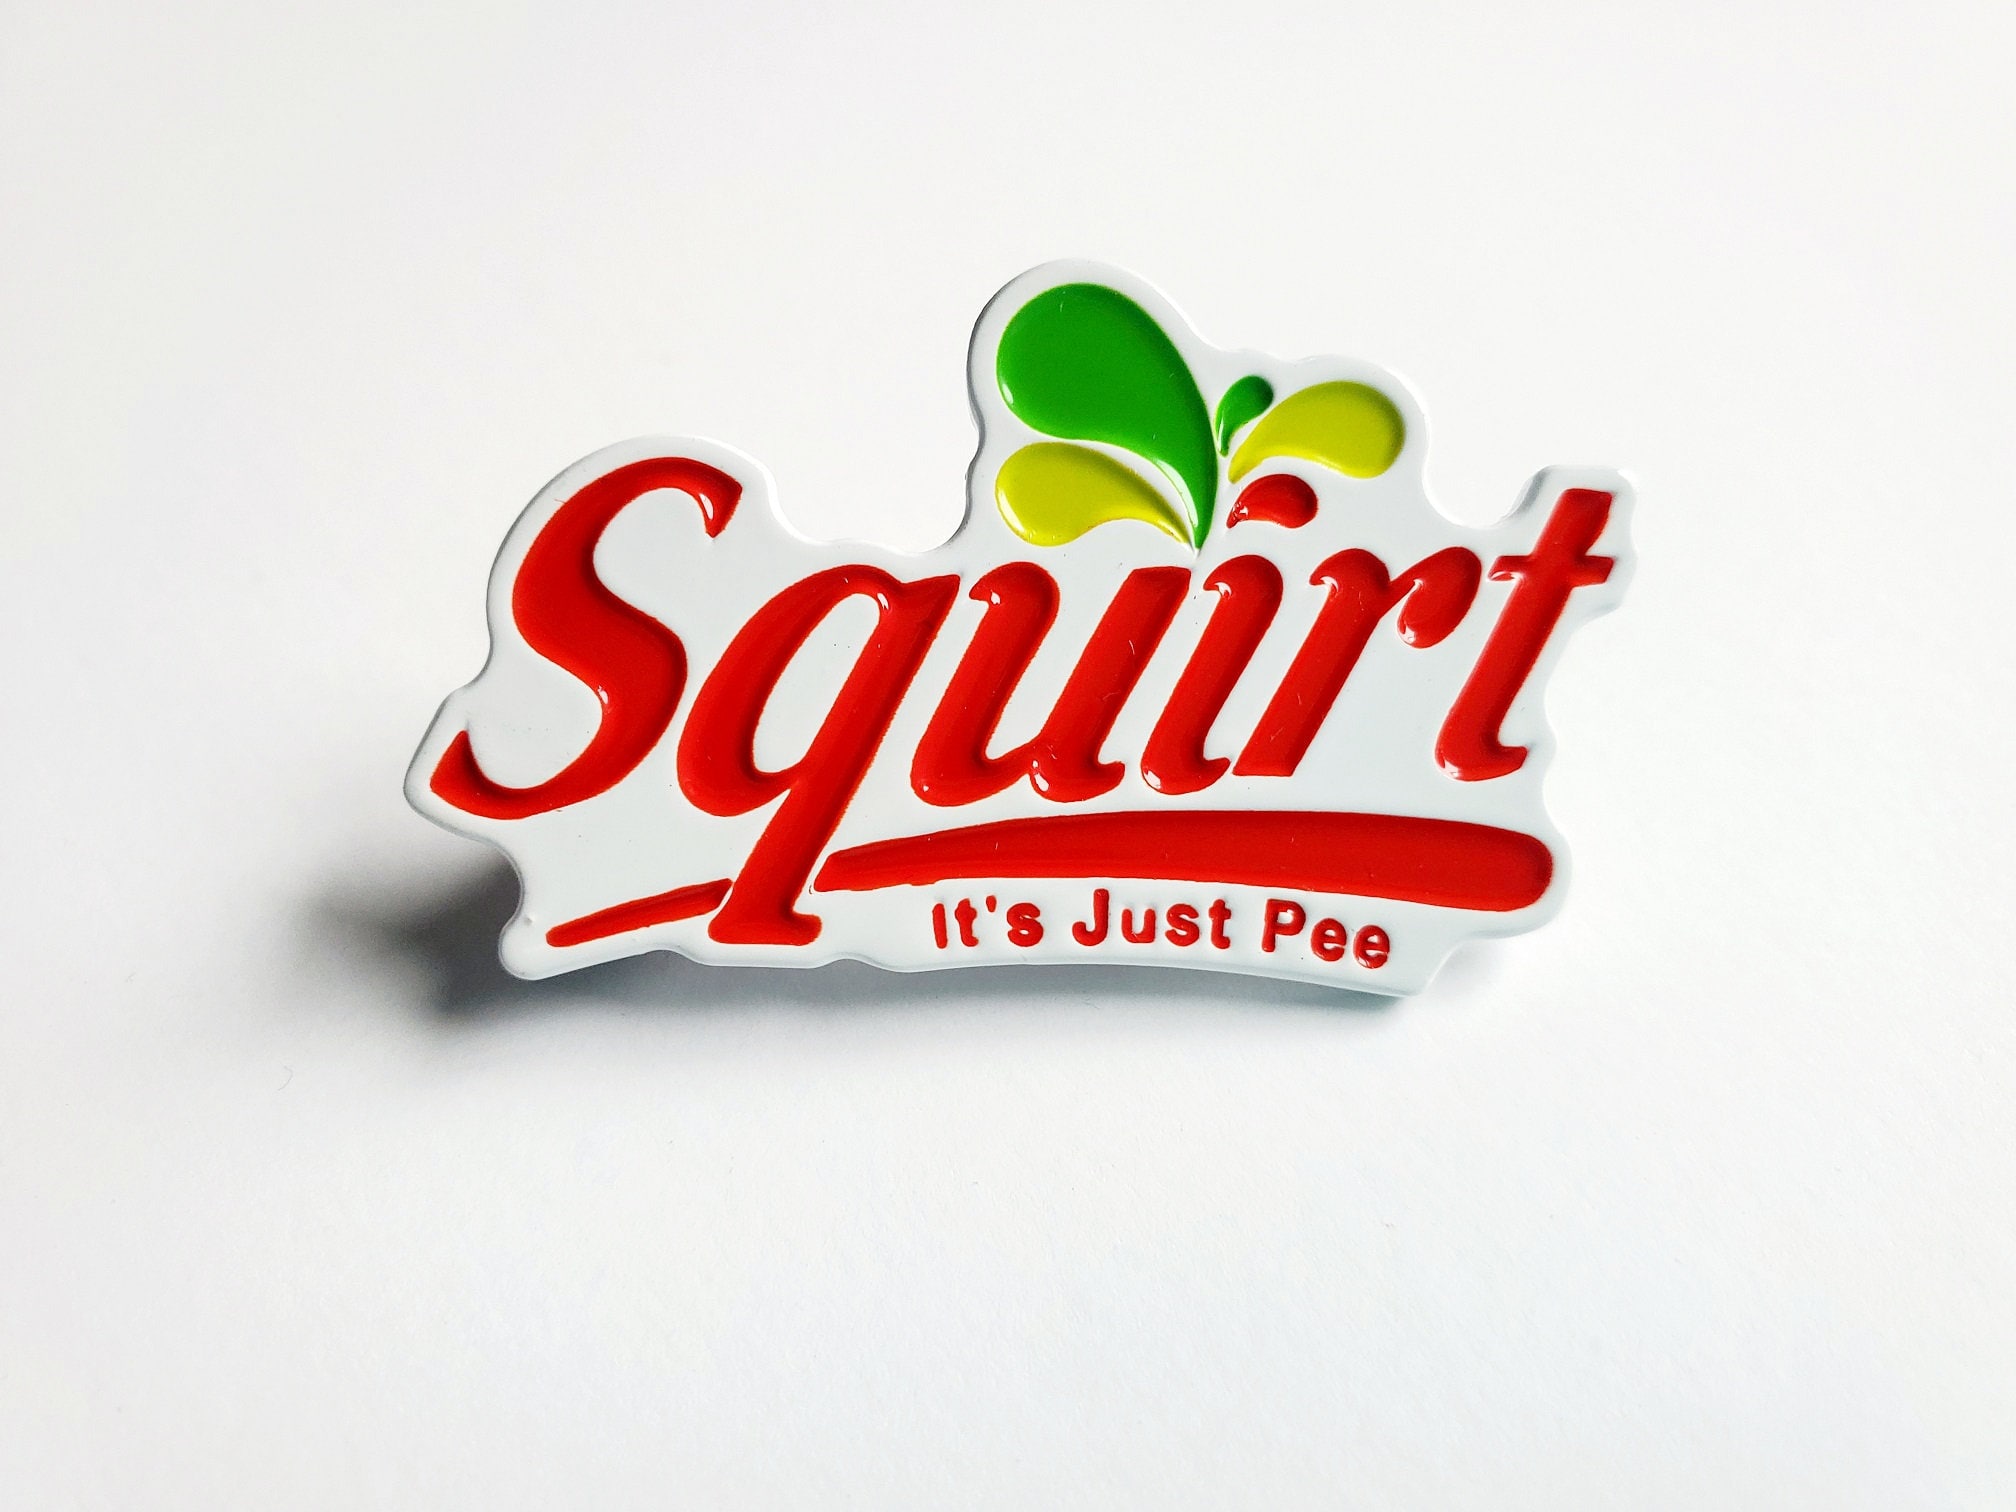 Pee Squirt